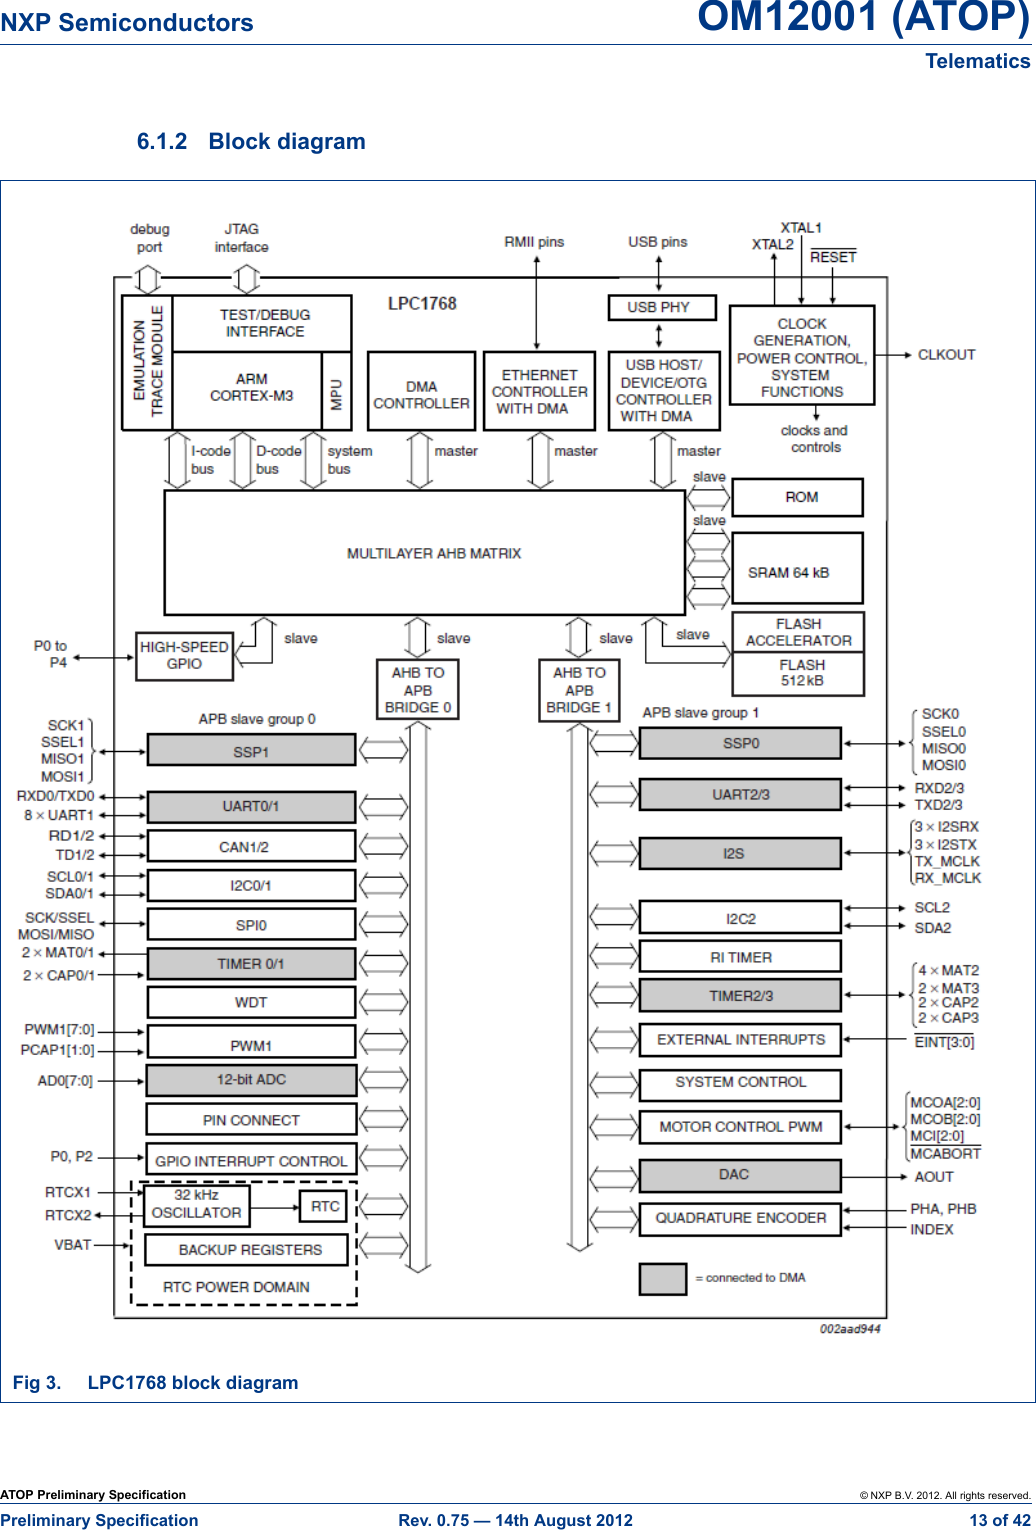 ATOP Preliminary Specification © NXP B.V. 2012. All rights reserved.Preliminary Specification Rev. 0.75 — 14th August 2012  13 of 42NXP Semiconductors OM12001 (ATOP)Telematics6.1.2 Block diagram Fig 3. LPC1768 block diagram